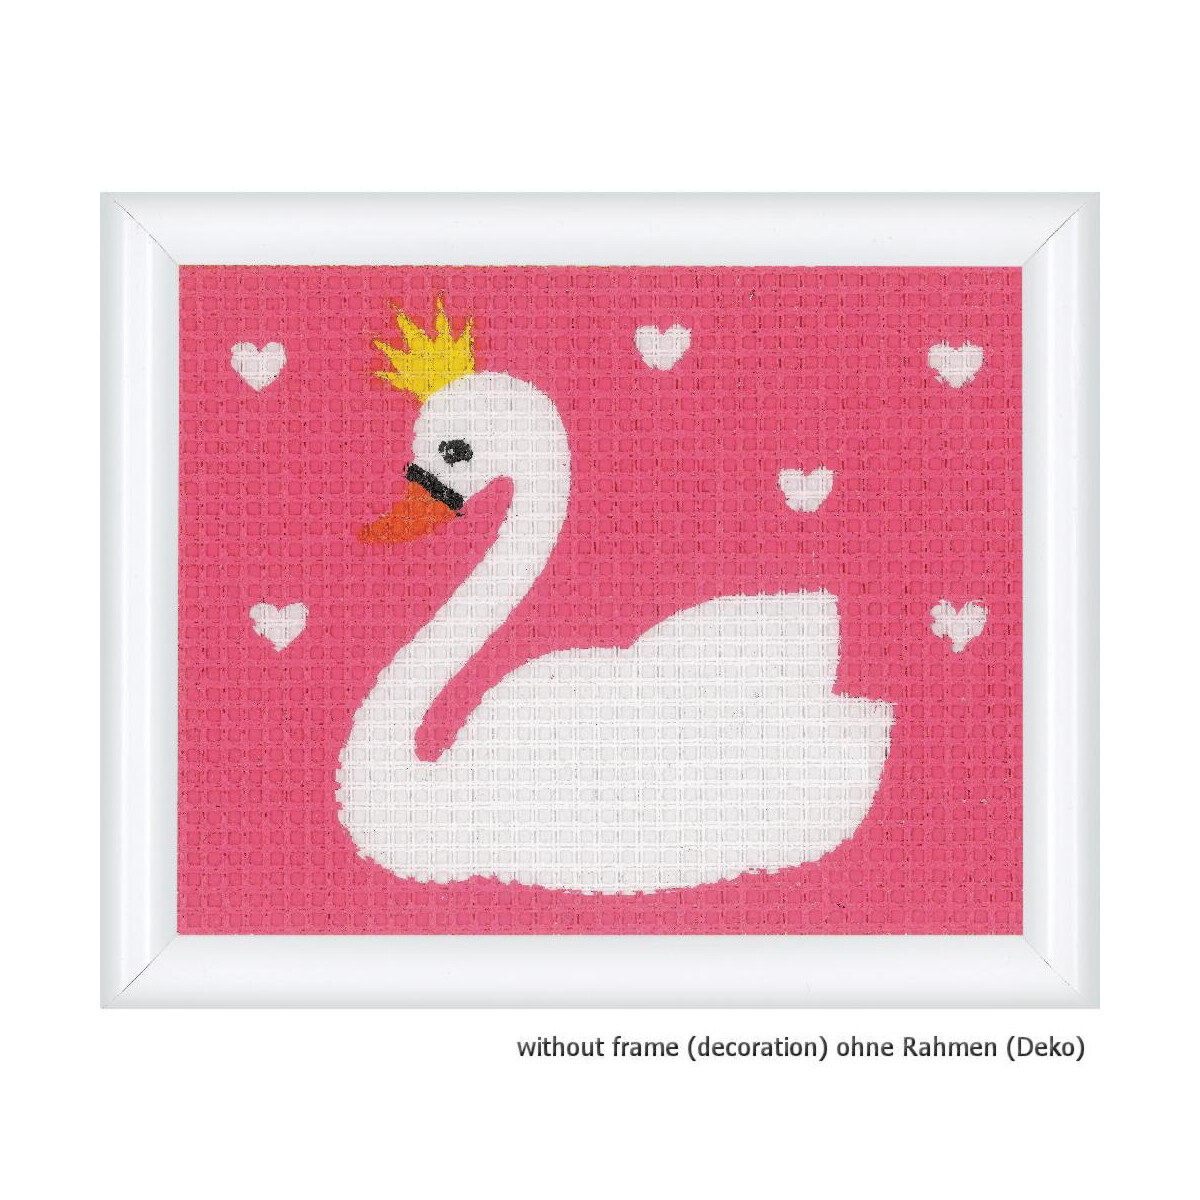 Vervaco stamped stitch kit Swan, DIY